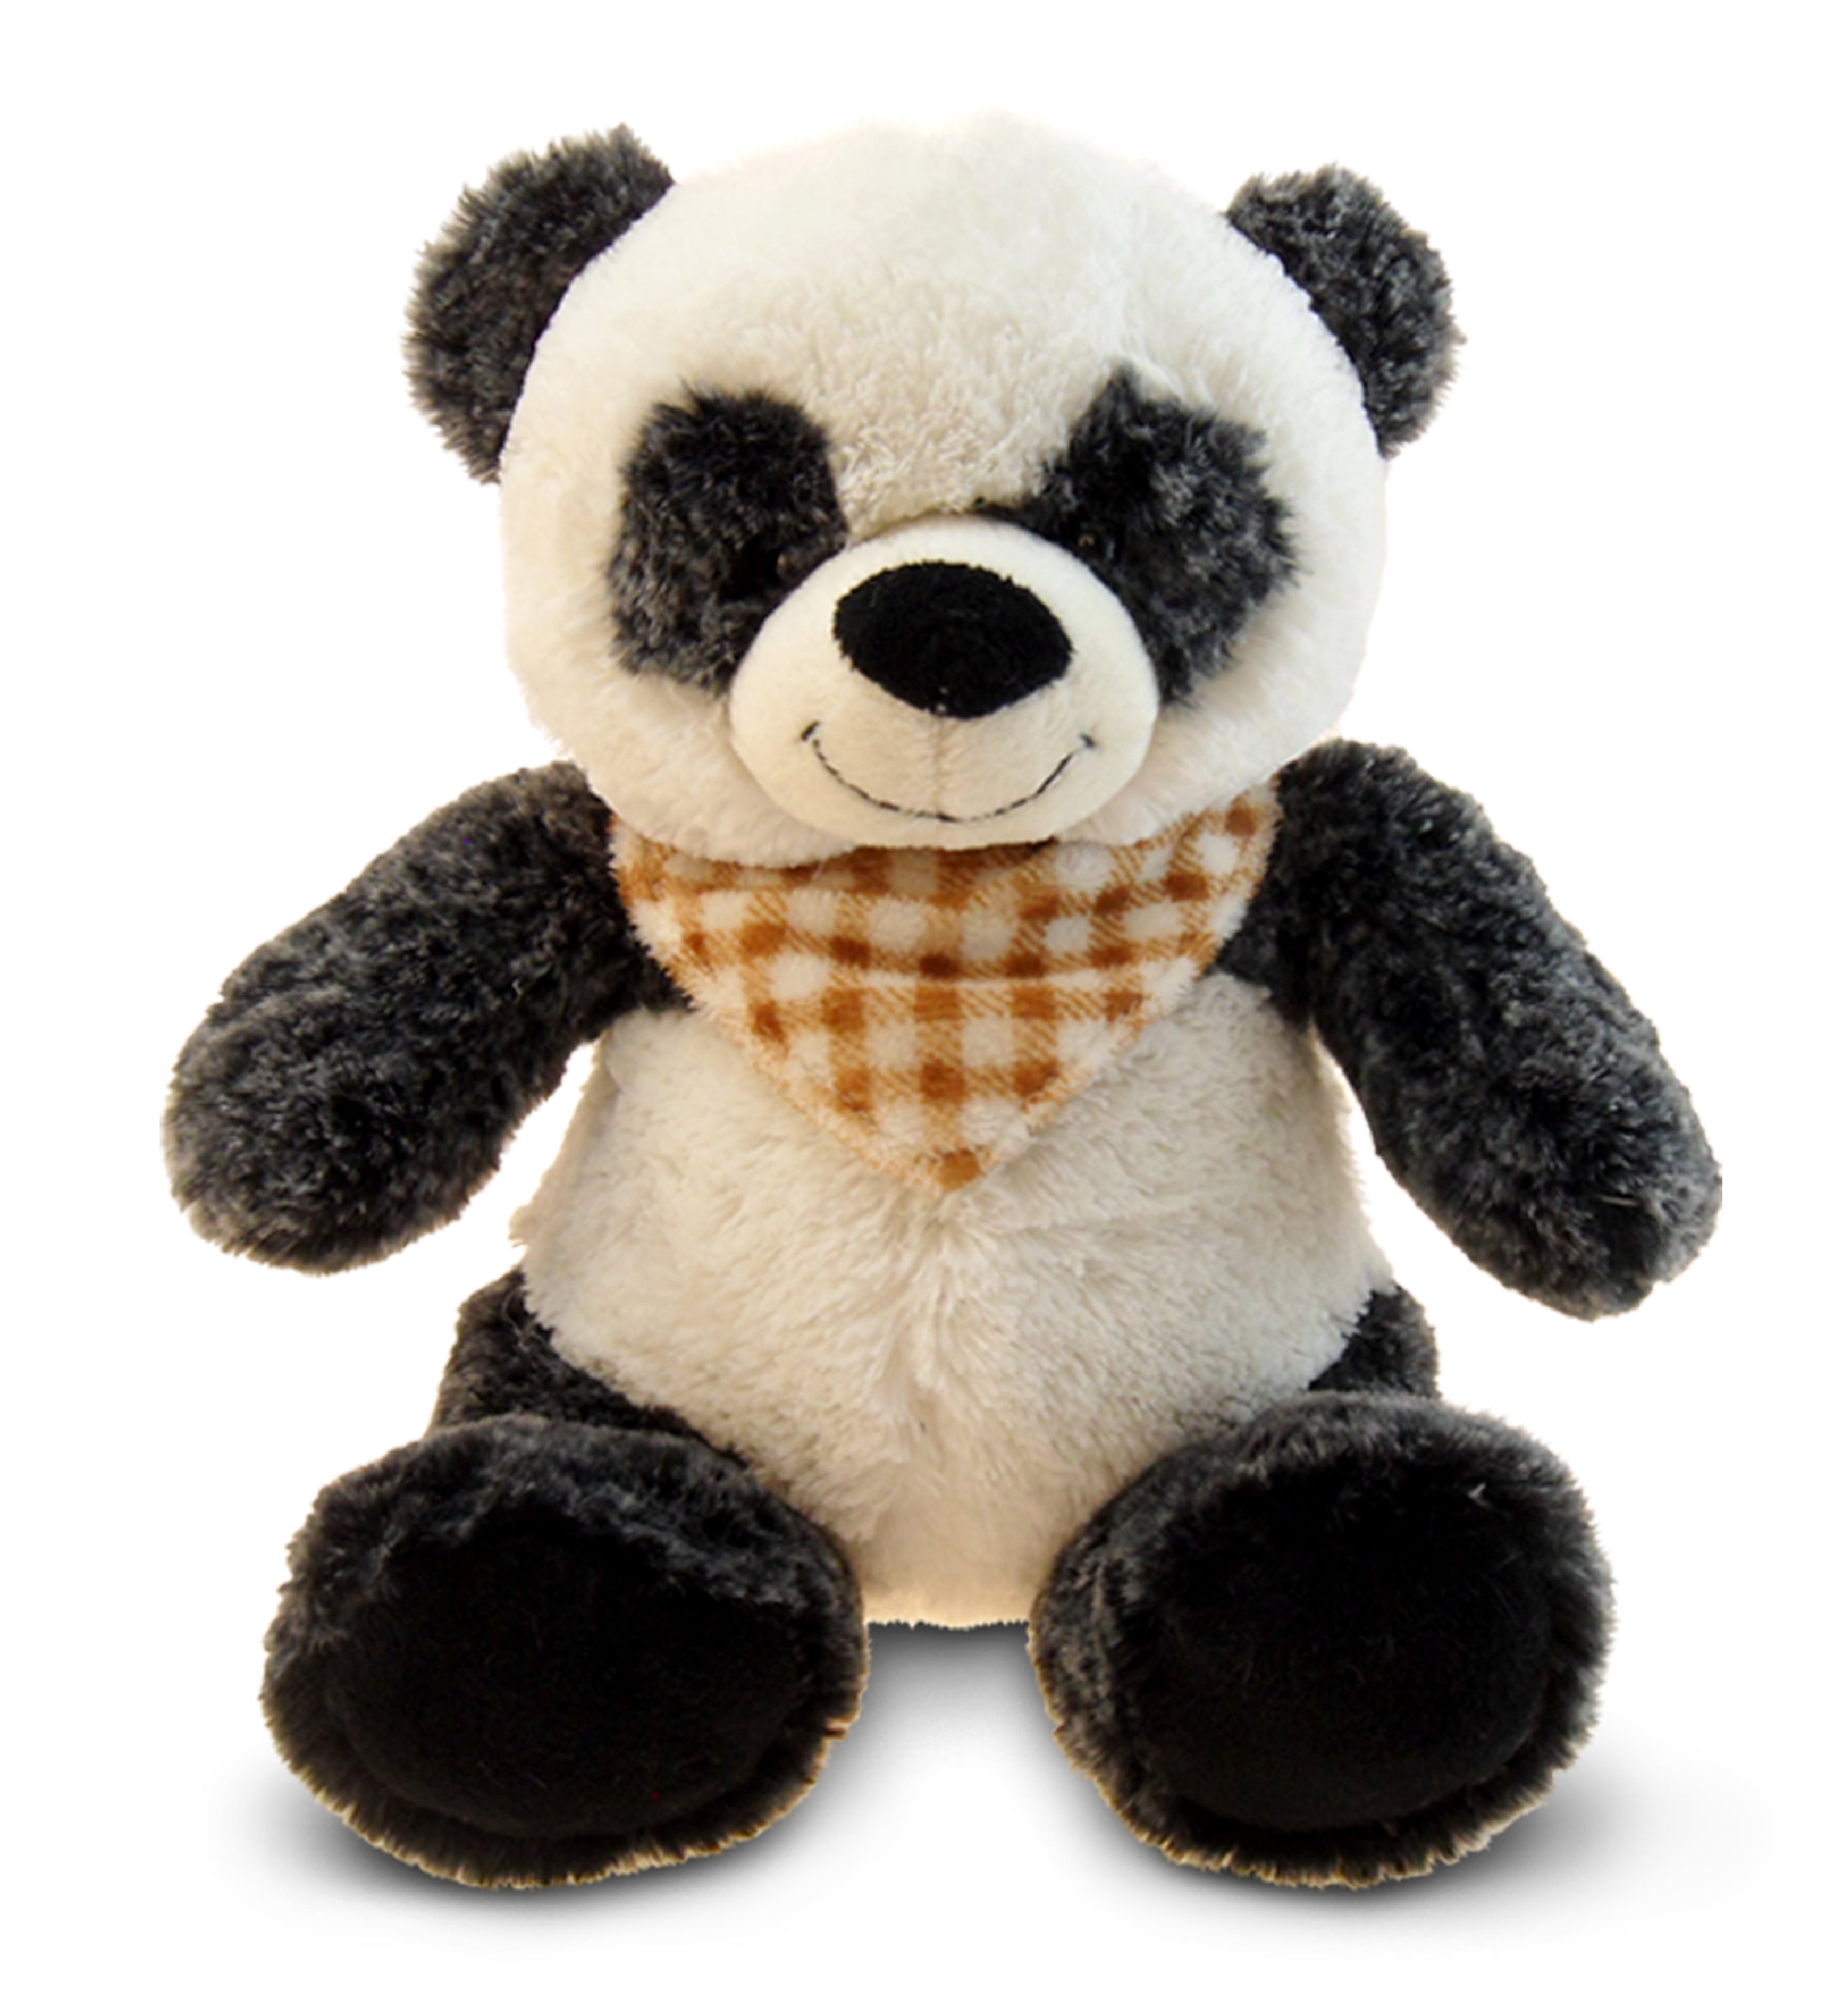 Teddy Bear Panda Stuffed Animal Toy For Toddler Kids Soft Cute Cuddle Plush Toy 